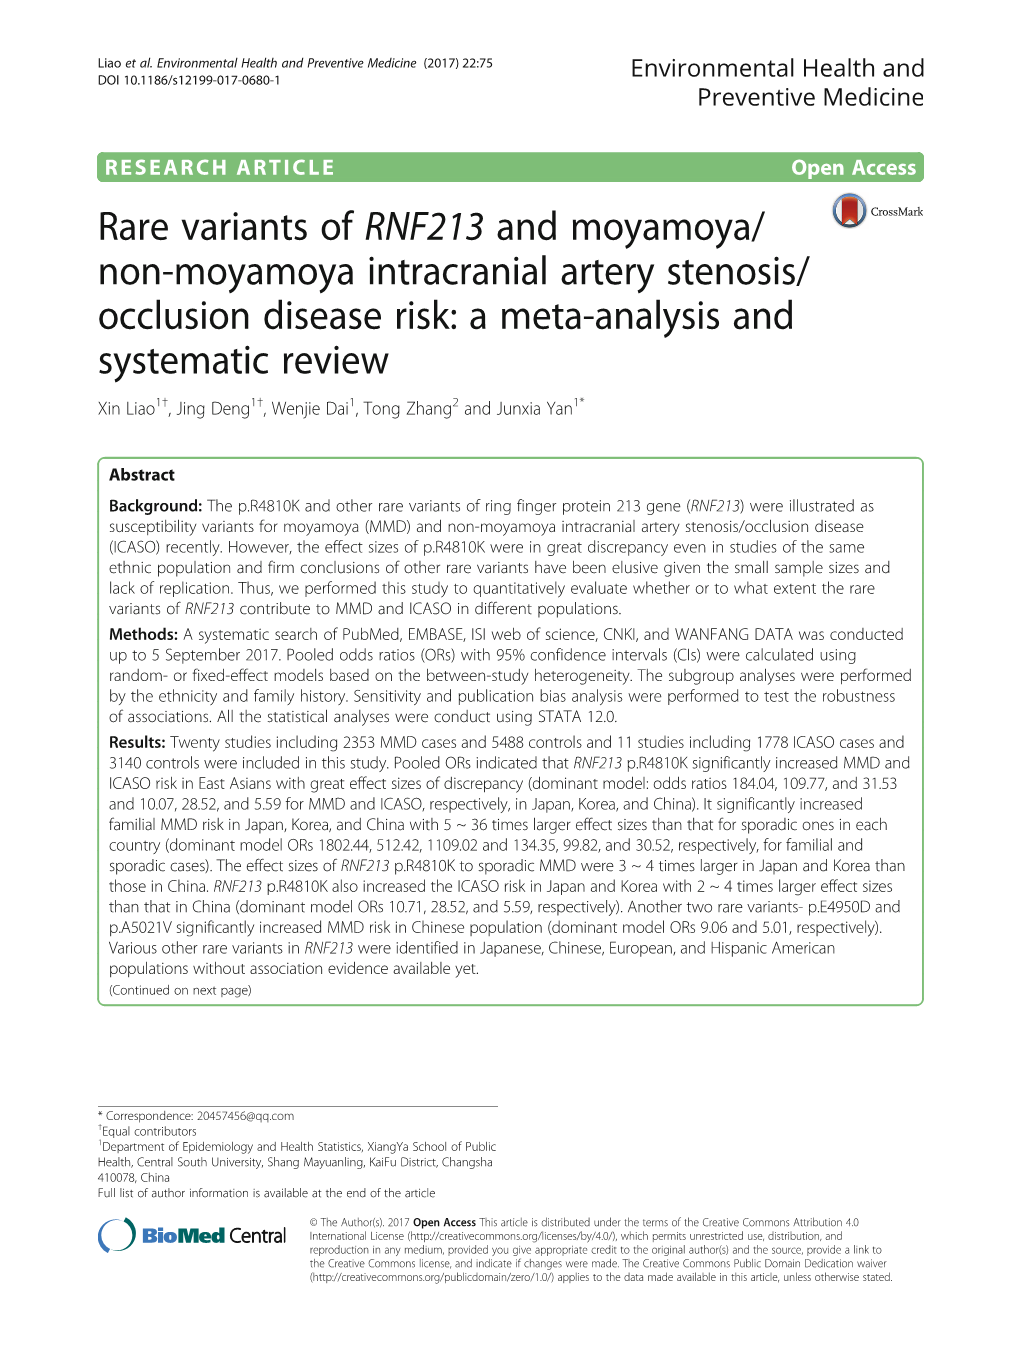 Rare Variants of RNF213 and Moyamoya/Non-Moyamoya Intracranial Artery Stenosis/Occlusion Disease Risk